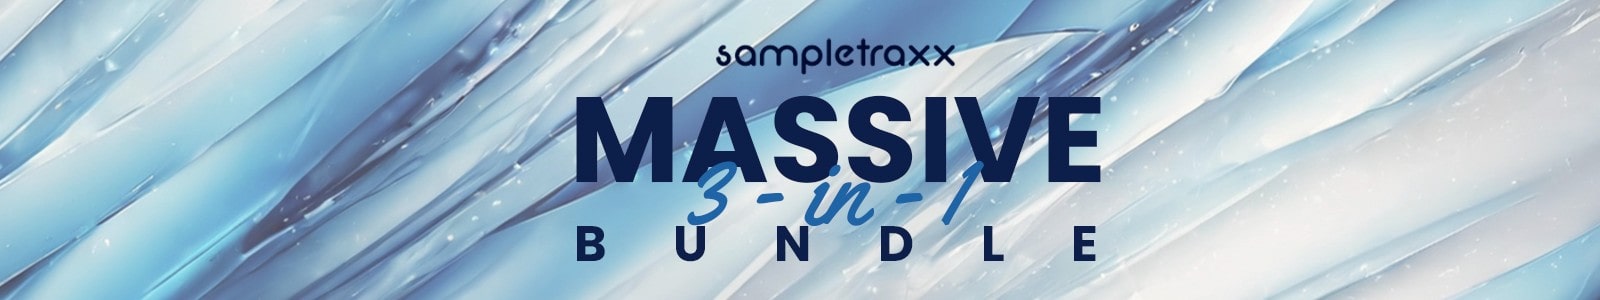 Sampletraxx Massive 3-in-1 Winter Bundle